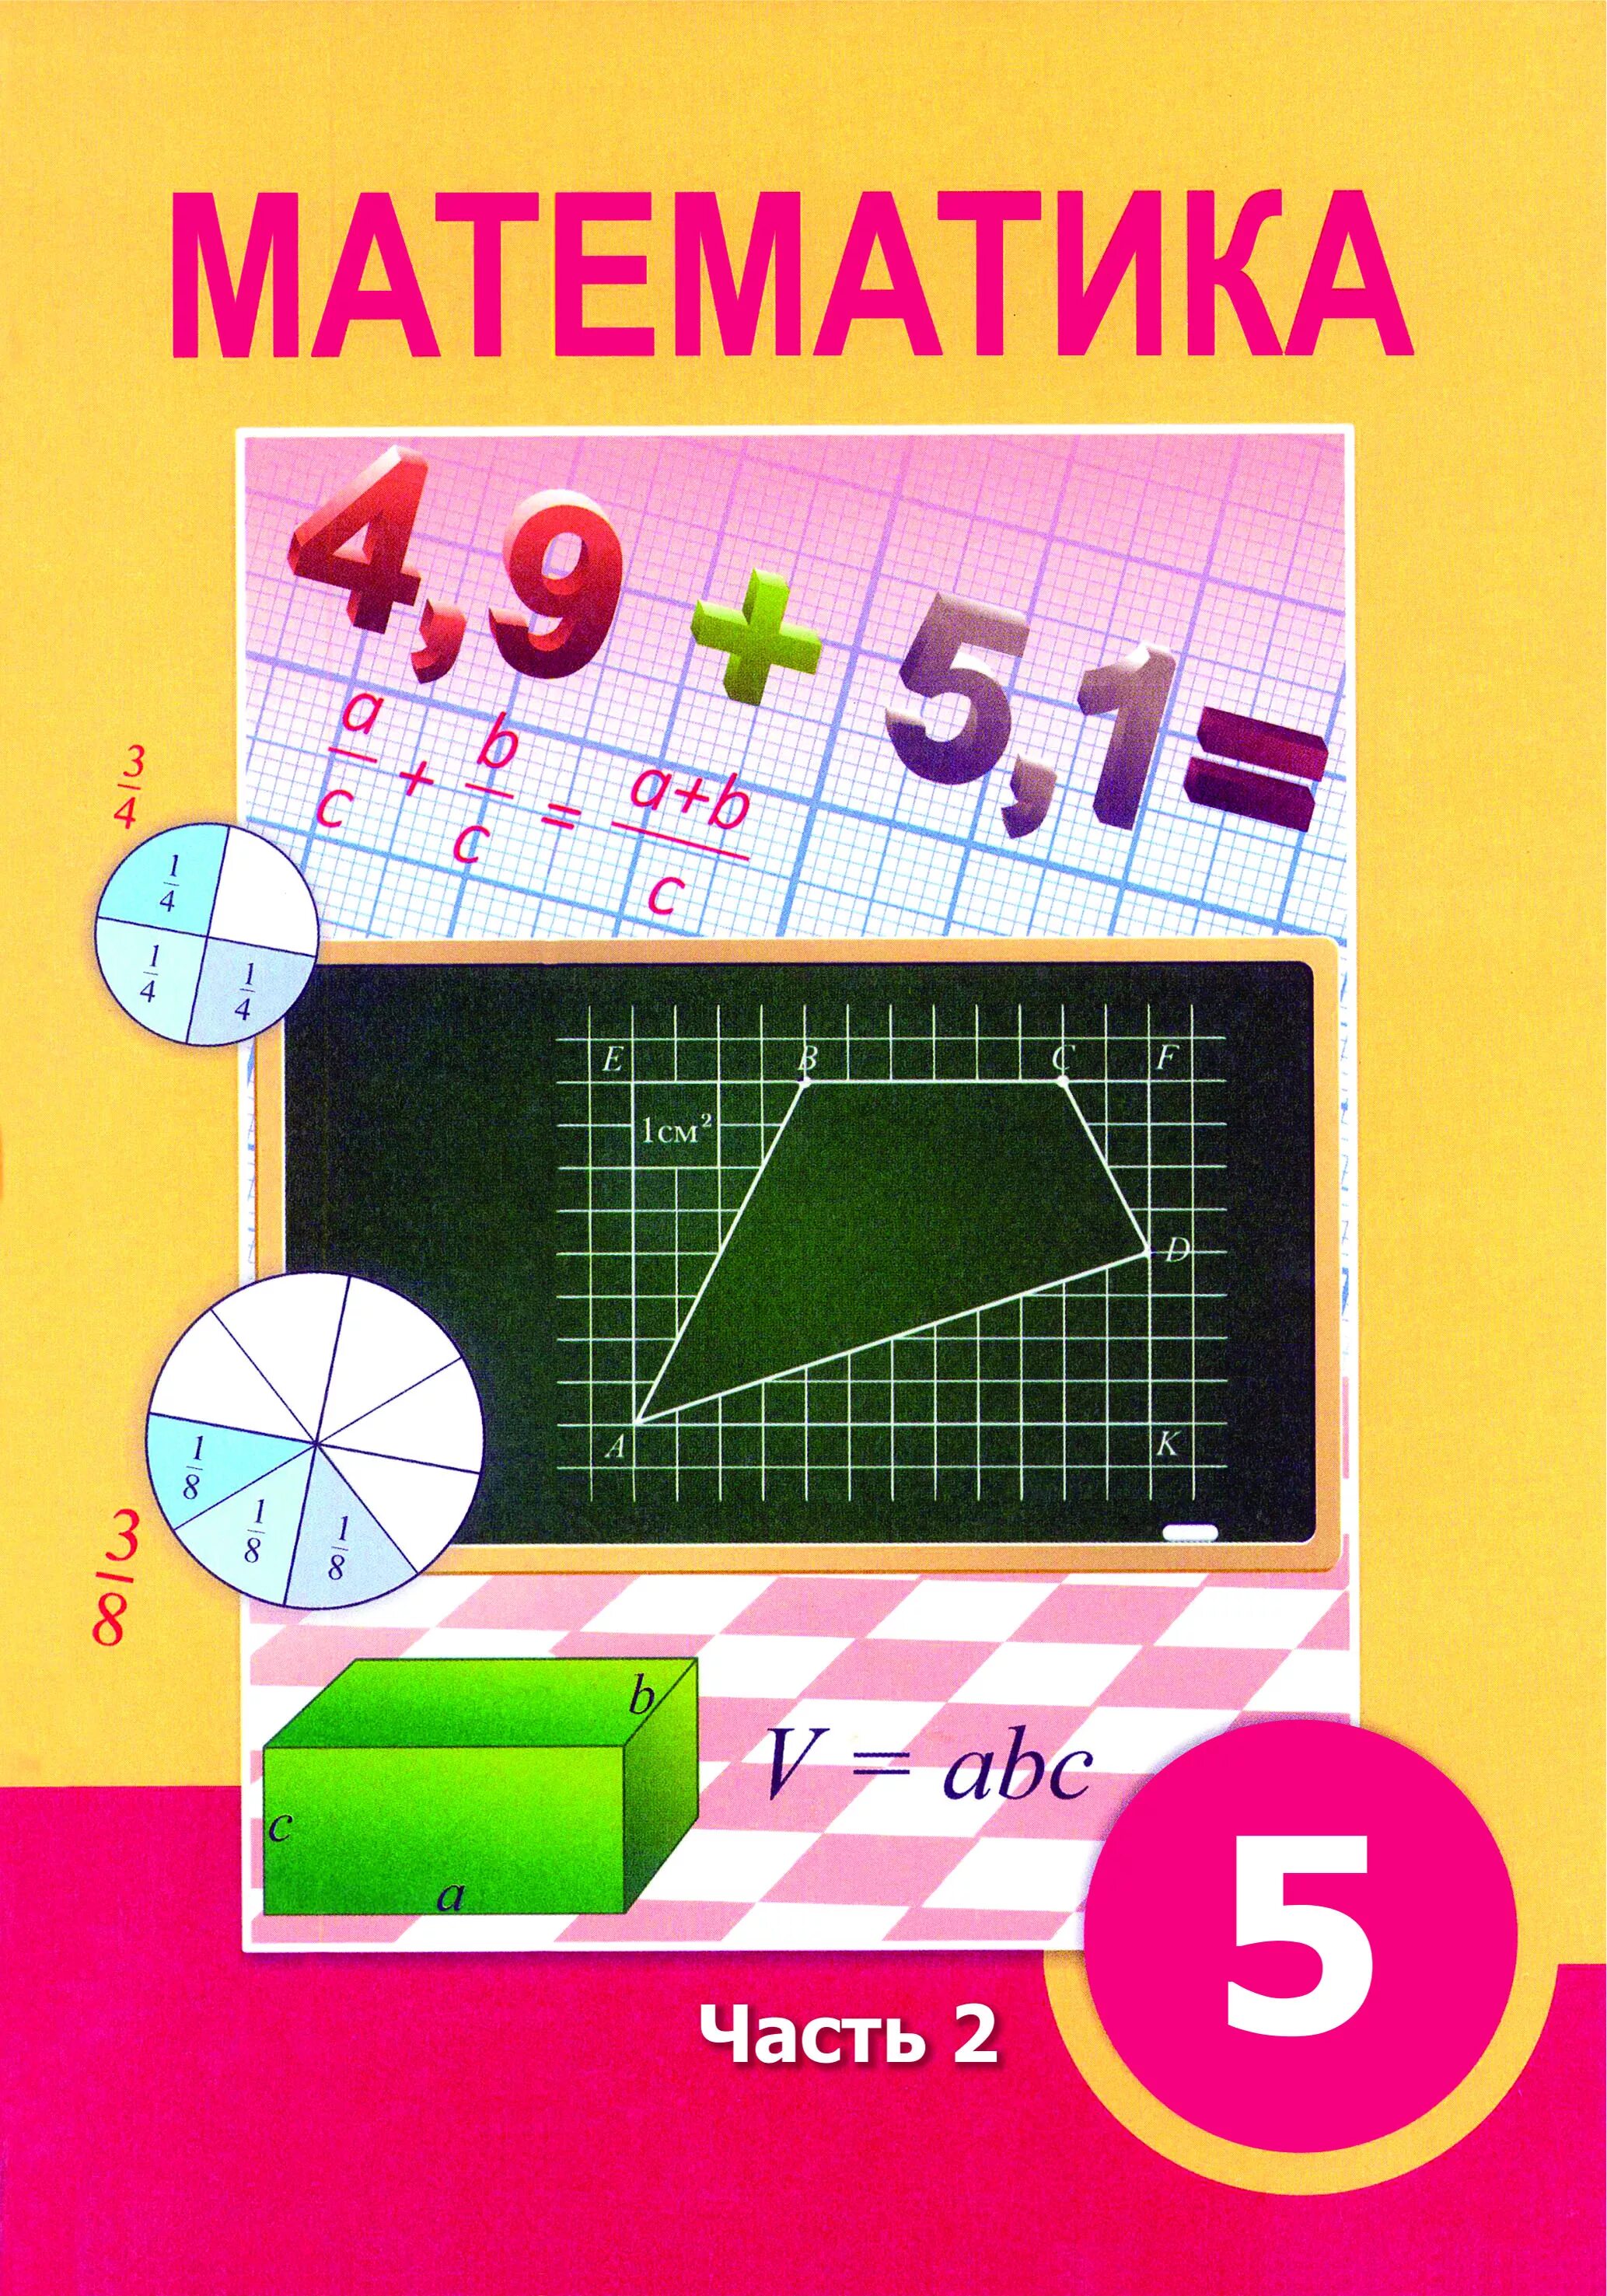 Учебник математики. Учебник по математике 5 класс. Учебник математики 5. Учебник математики 5 класс.